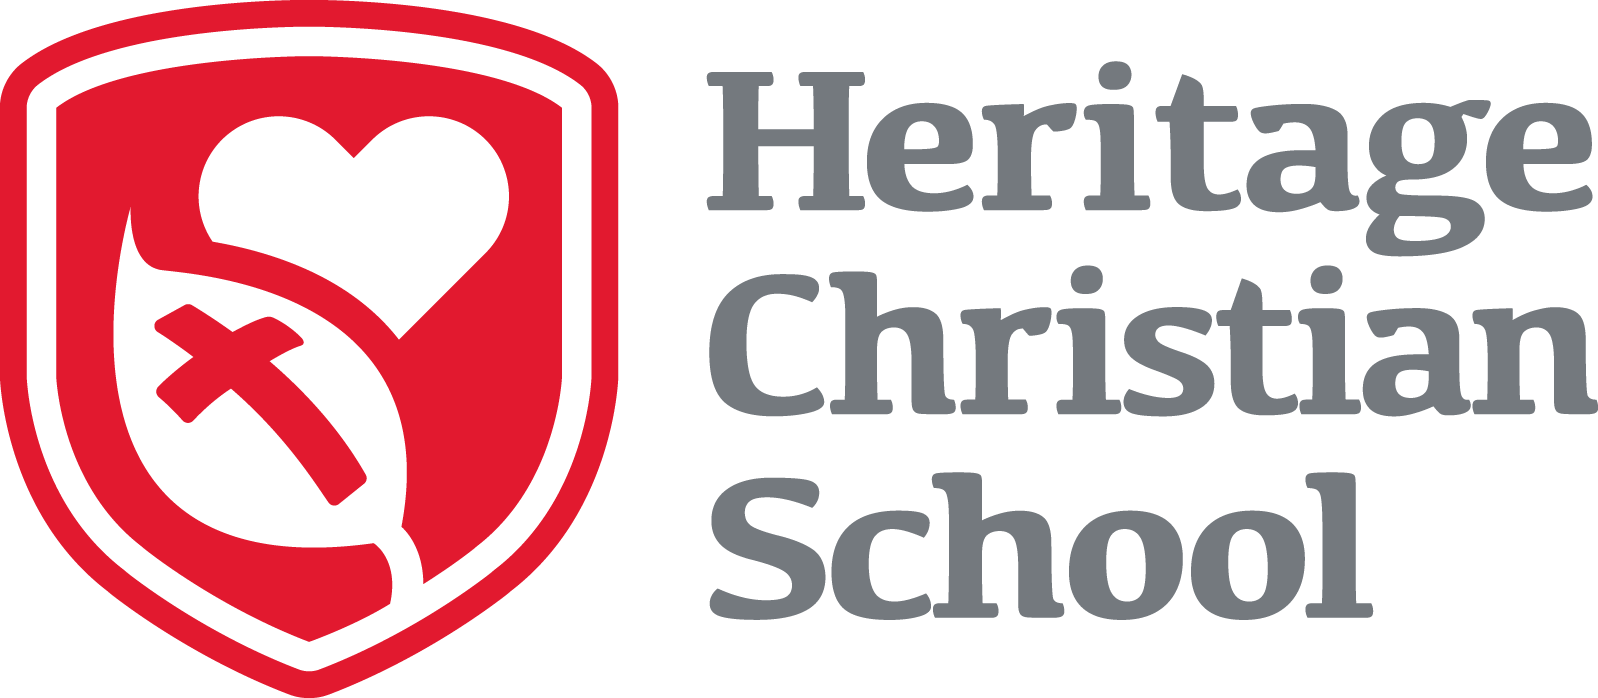 Heritage Christian School - Canton logo